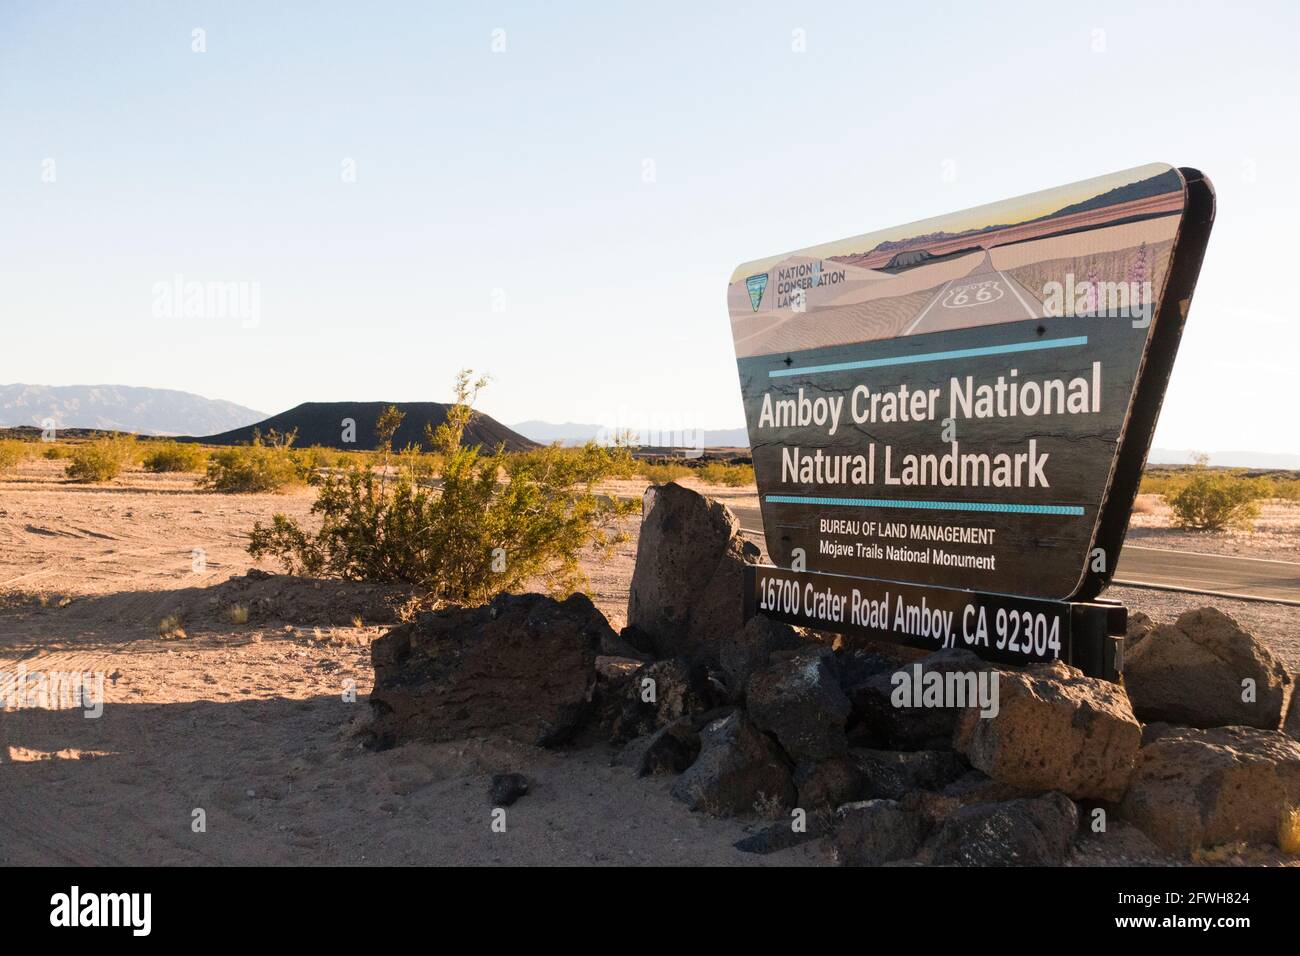 Amboy Crater National Natural Landmark sign - California USA Stock Photo